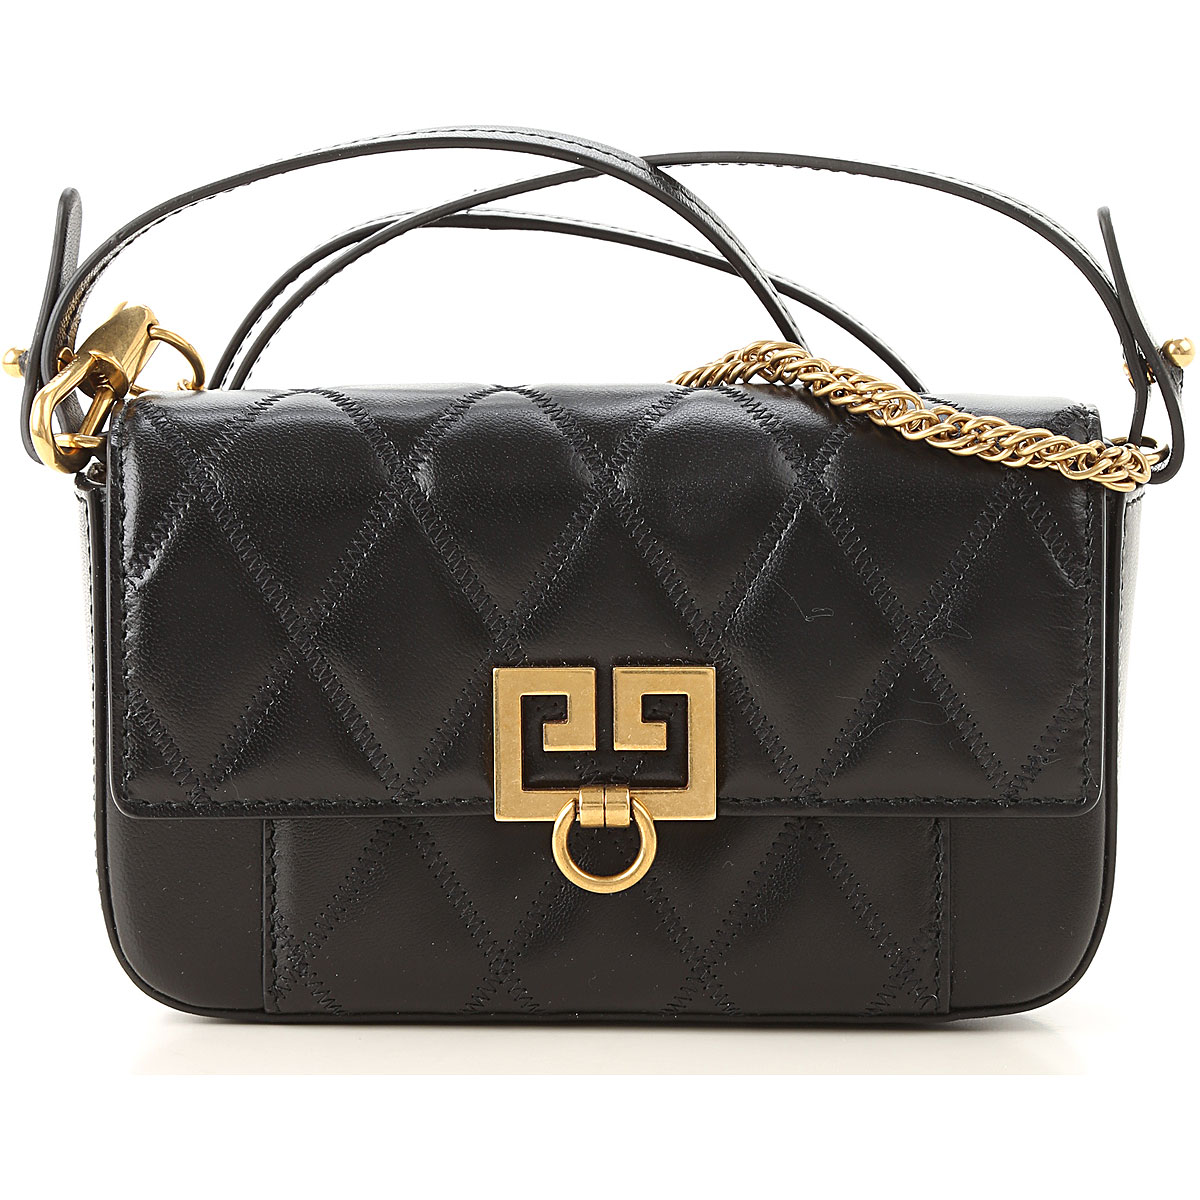 Handbags Givenchy, Style code: bb604db08z-001-